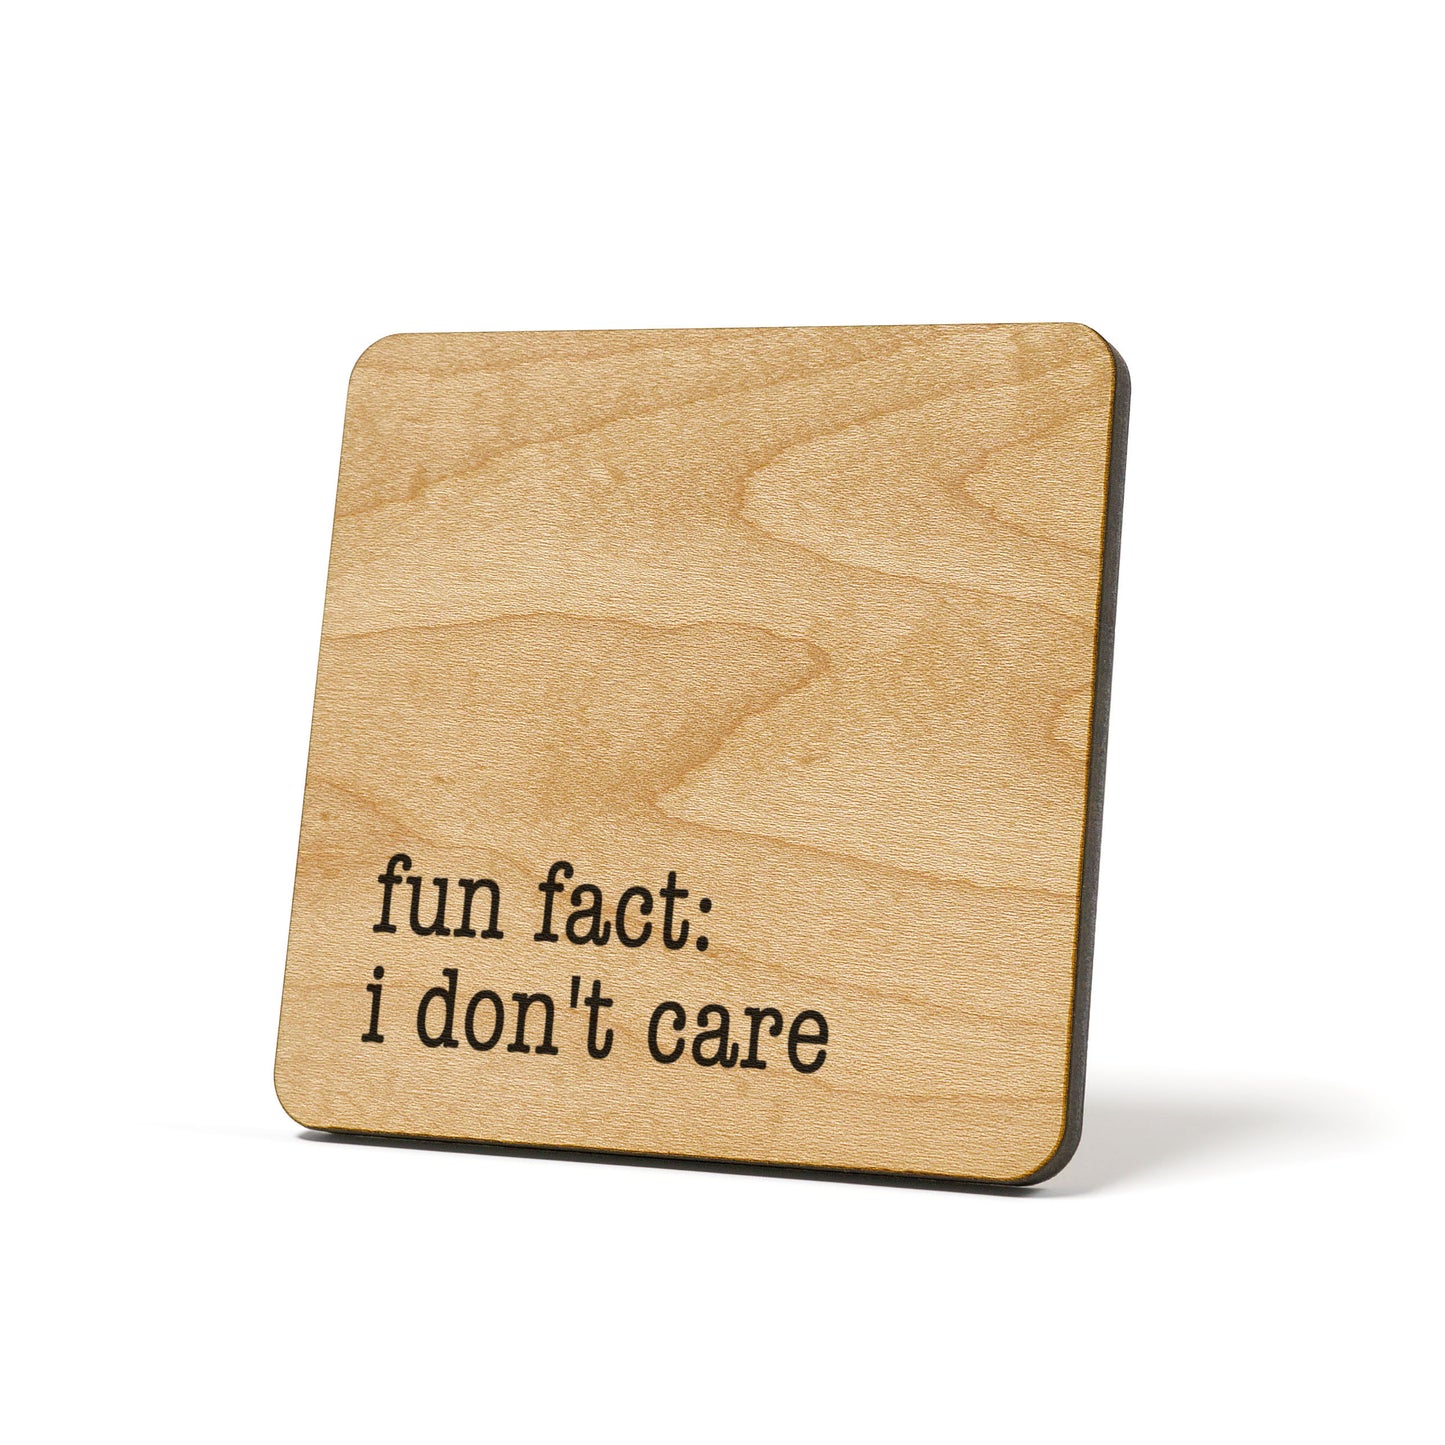 Fun fact: I don't care Quote Coaster